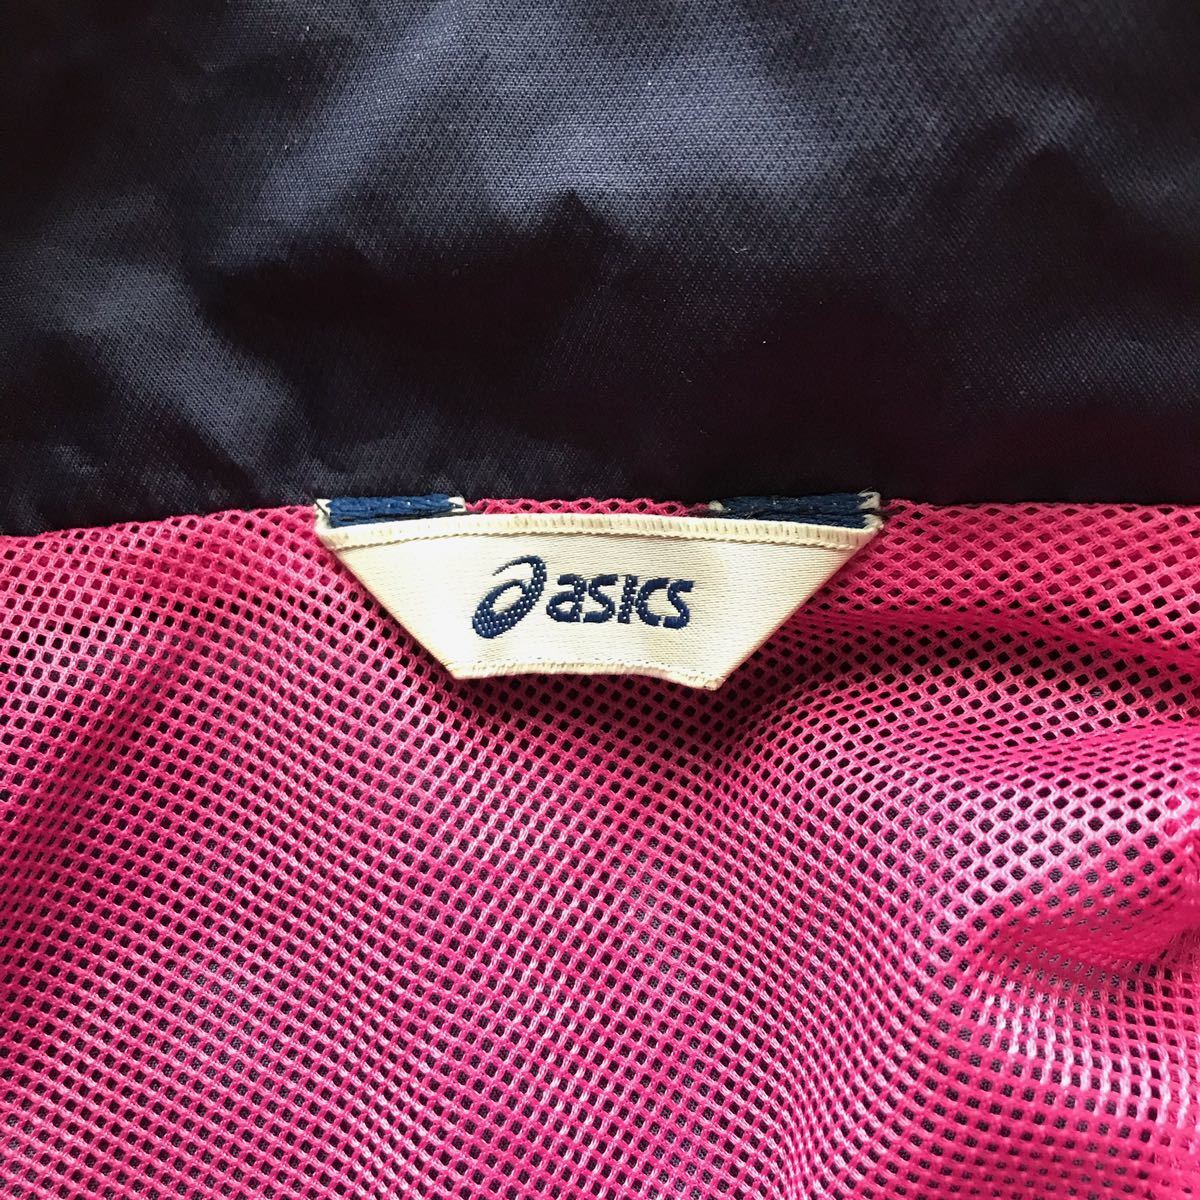  Asics блузон 586-1-14 женский M темно-синий розовый спорт наземный футбол 